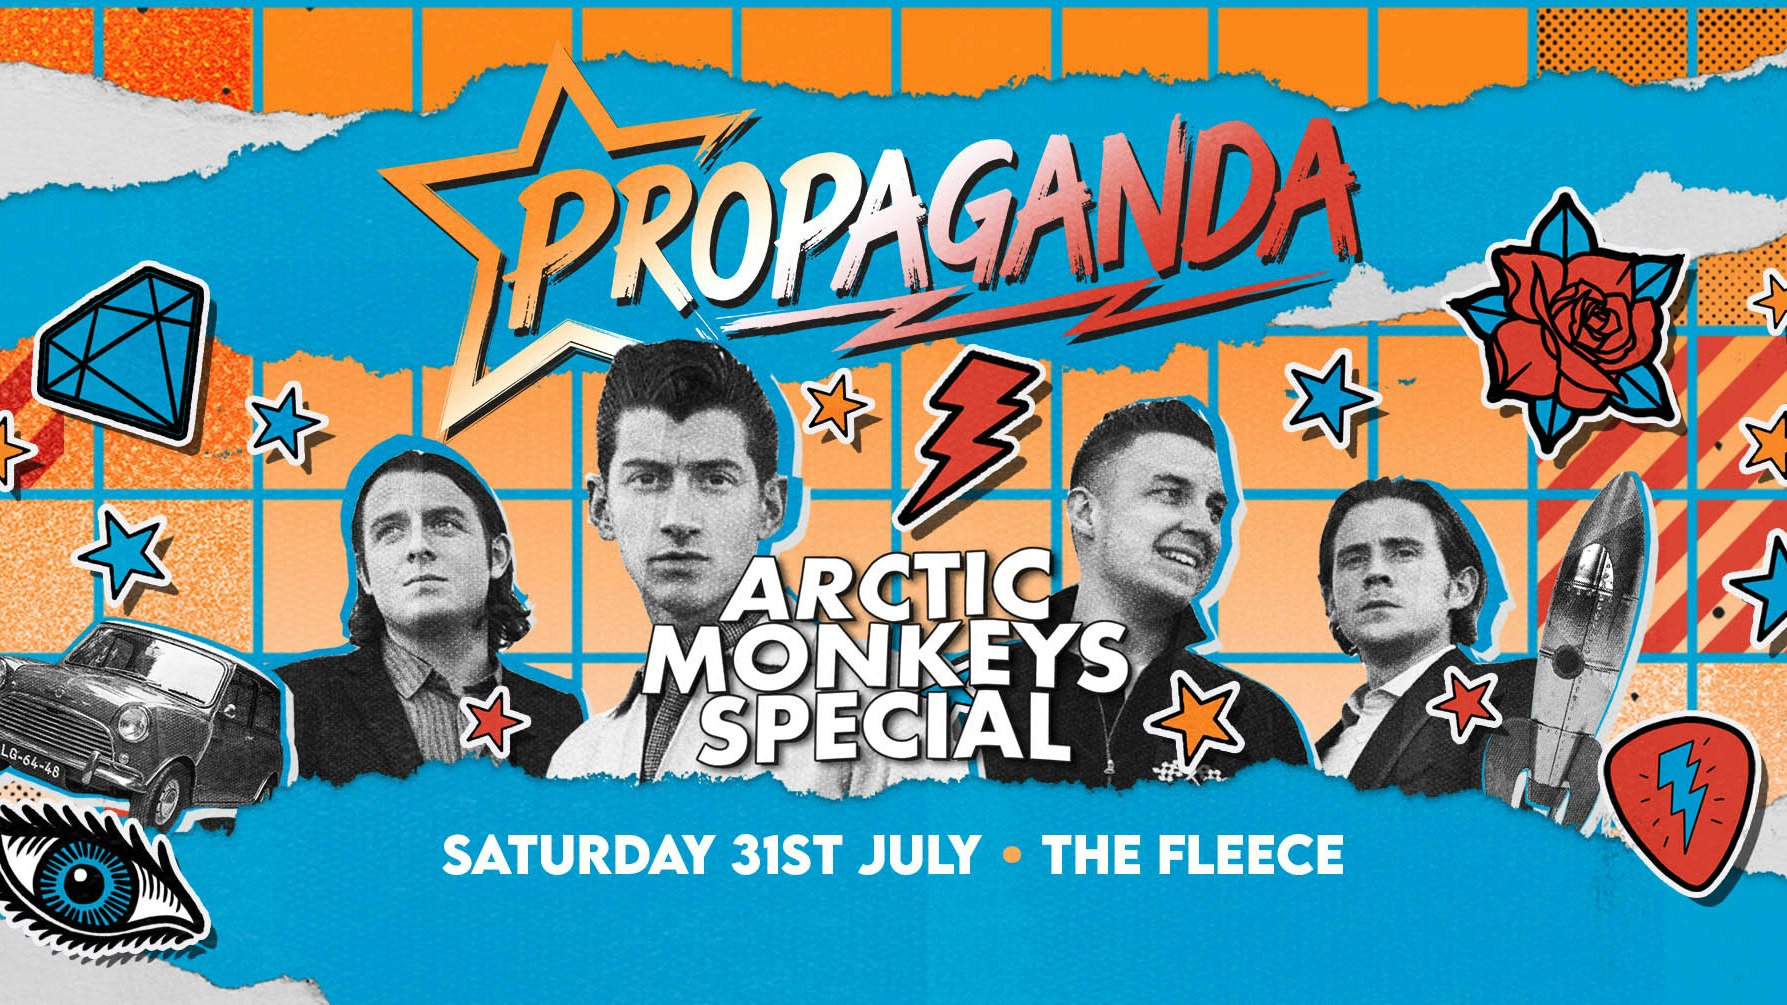 Propaganda Bristol – Arctic Monkeys Special!